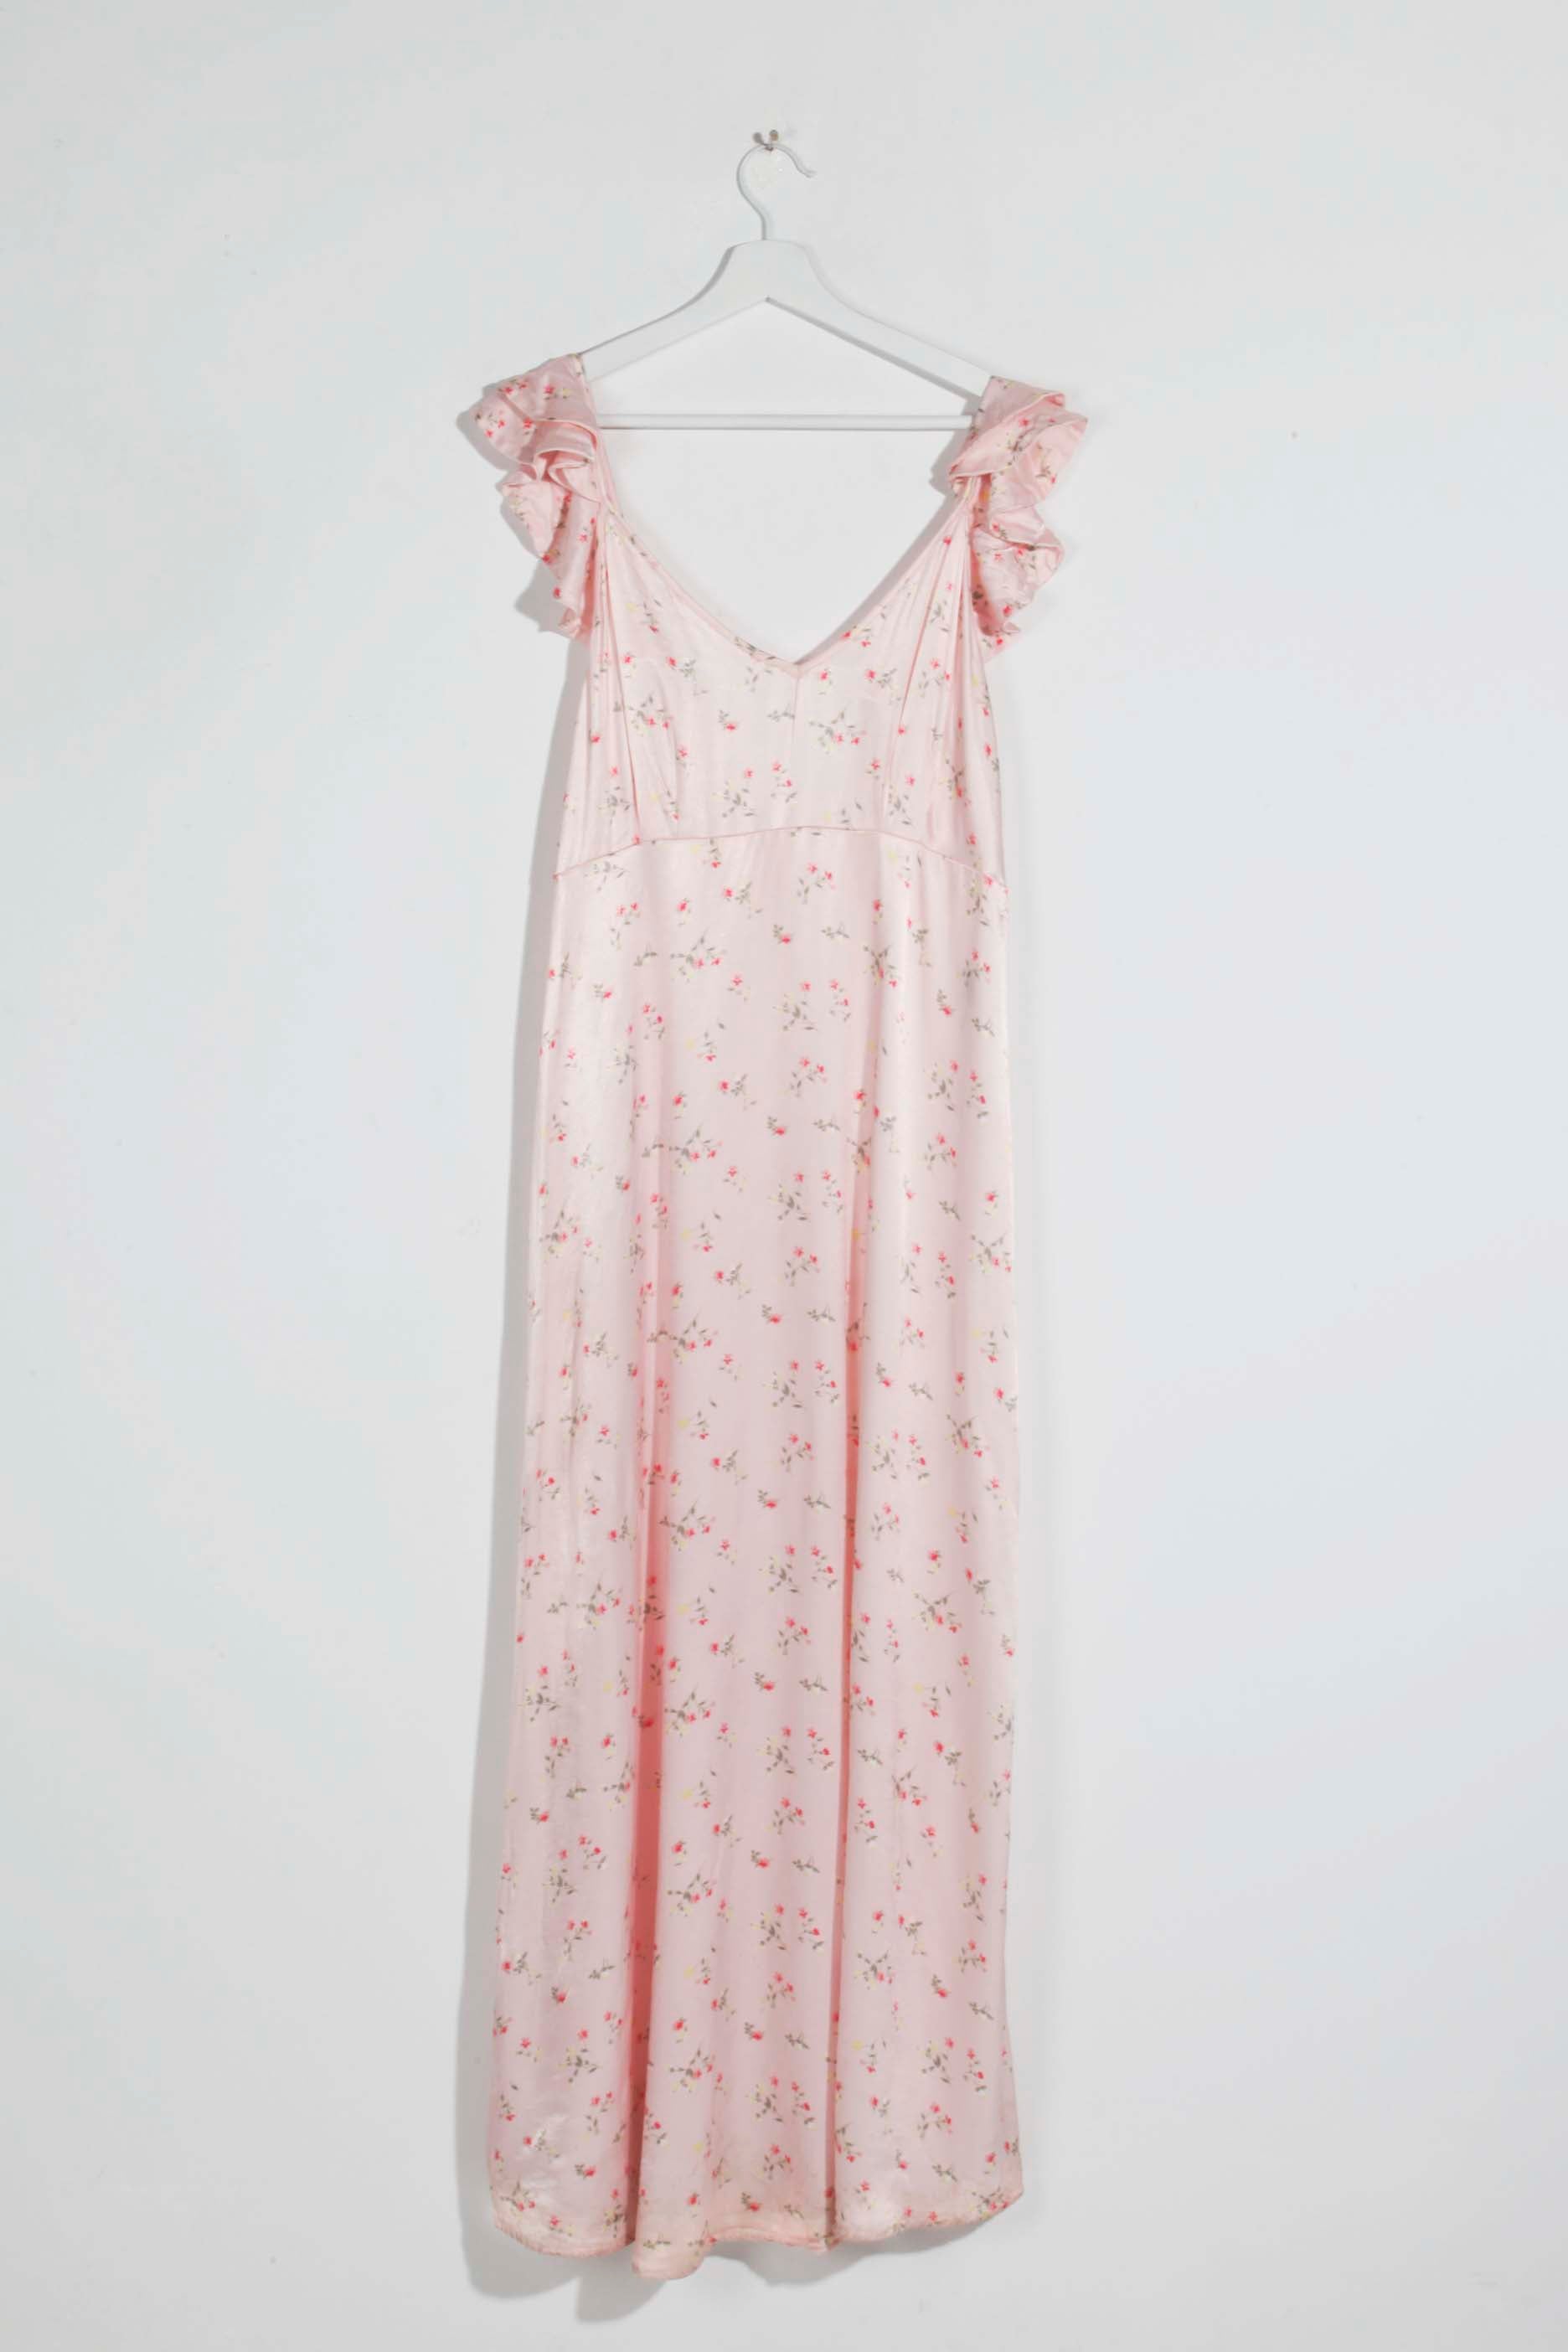 Ghost Pink Satin Floral Dress (L)